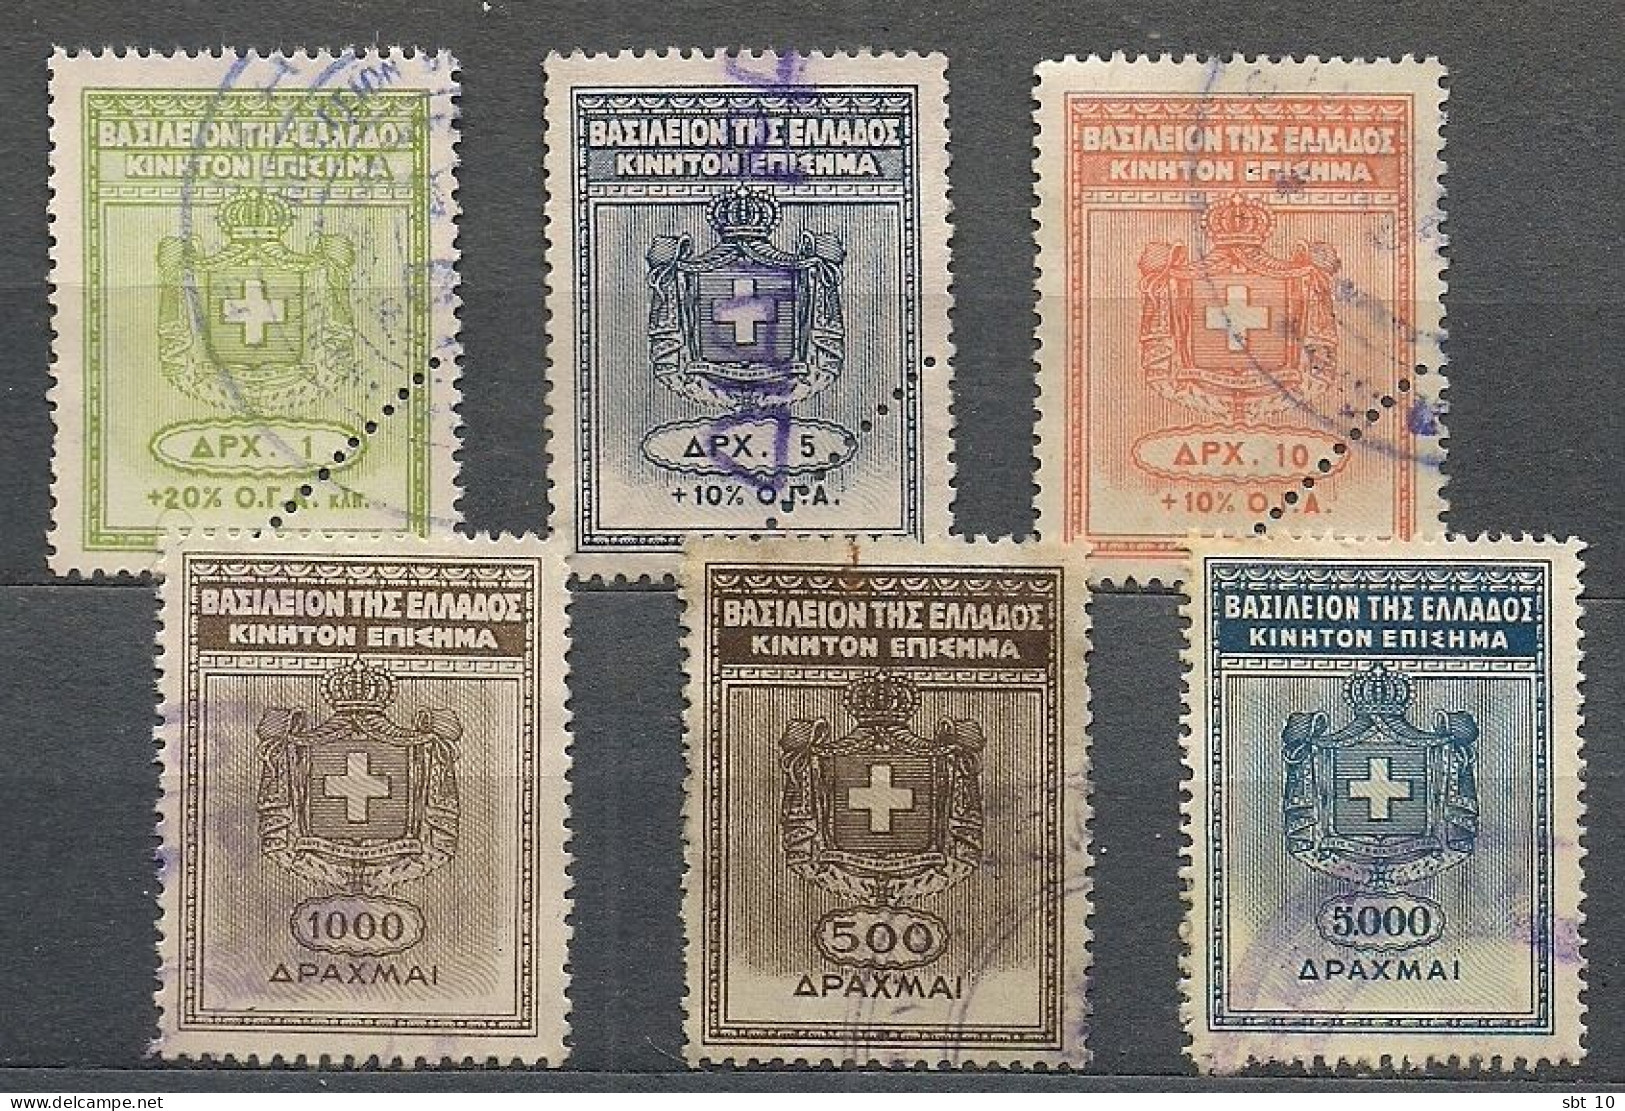 Greece - Kingdom Of Greece Revenue Stamp 6 Value - Used - Revenue Stamps